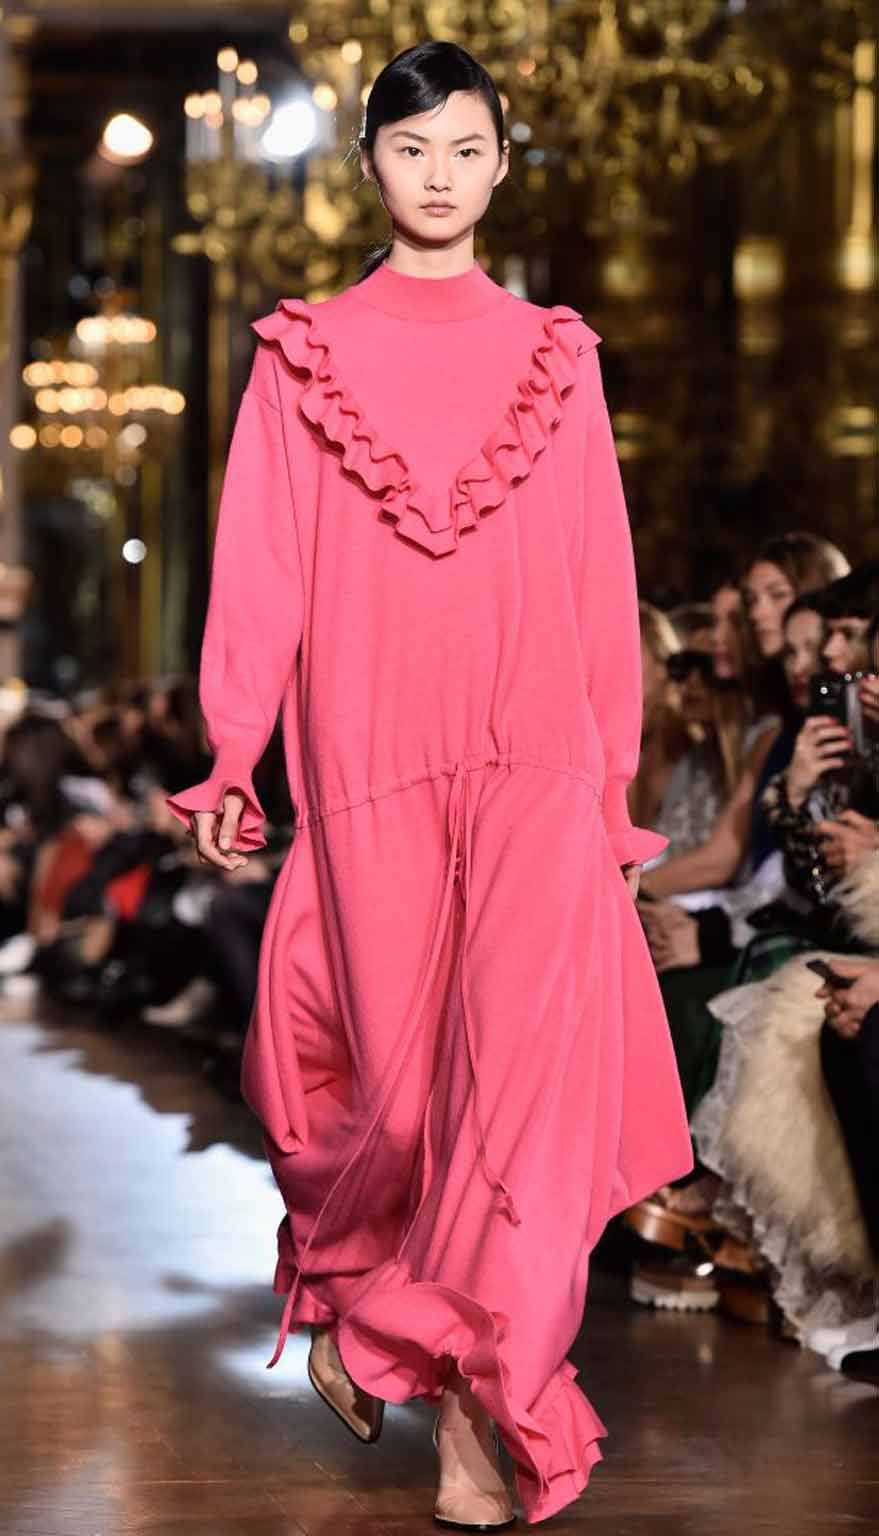 Designs by Stella McCartney at Paris Fashion Week